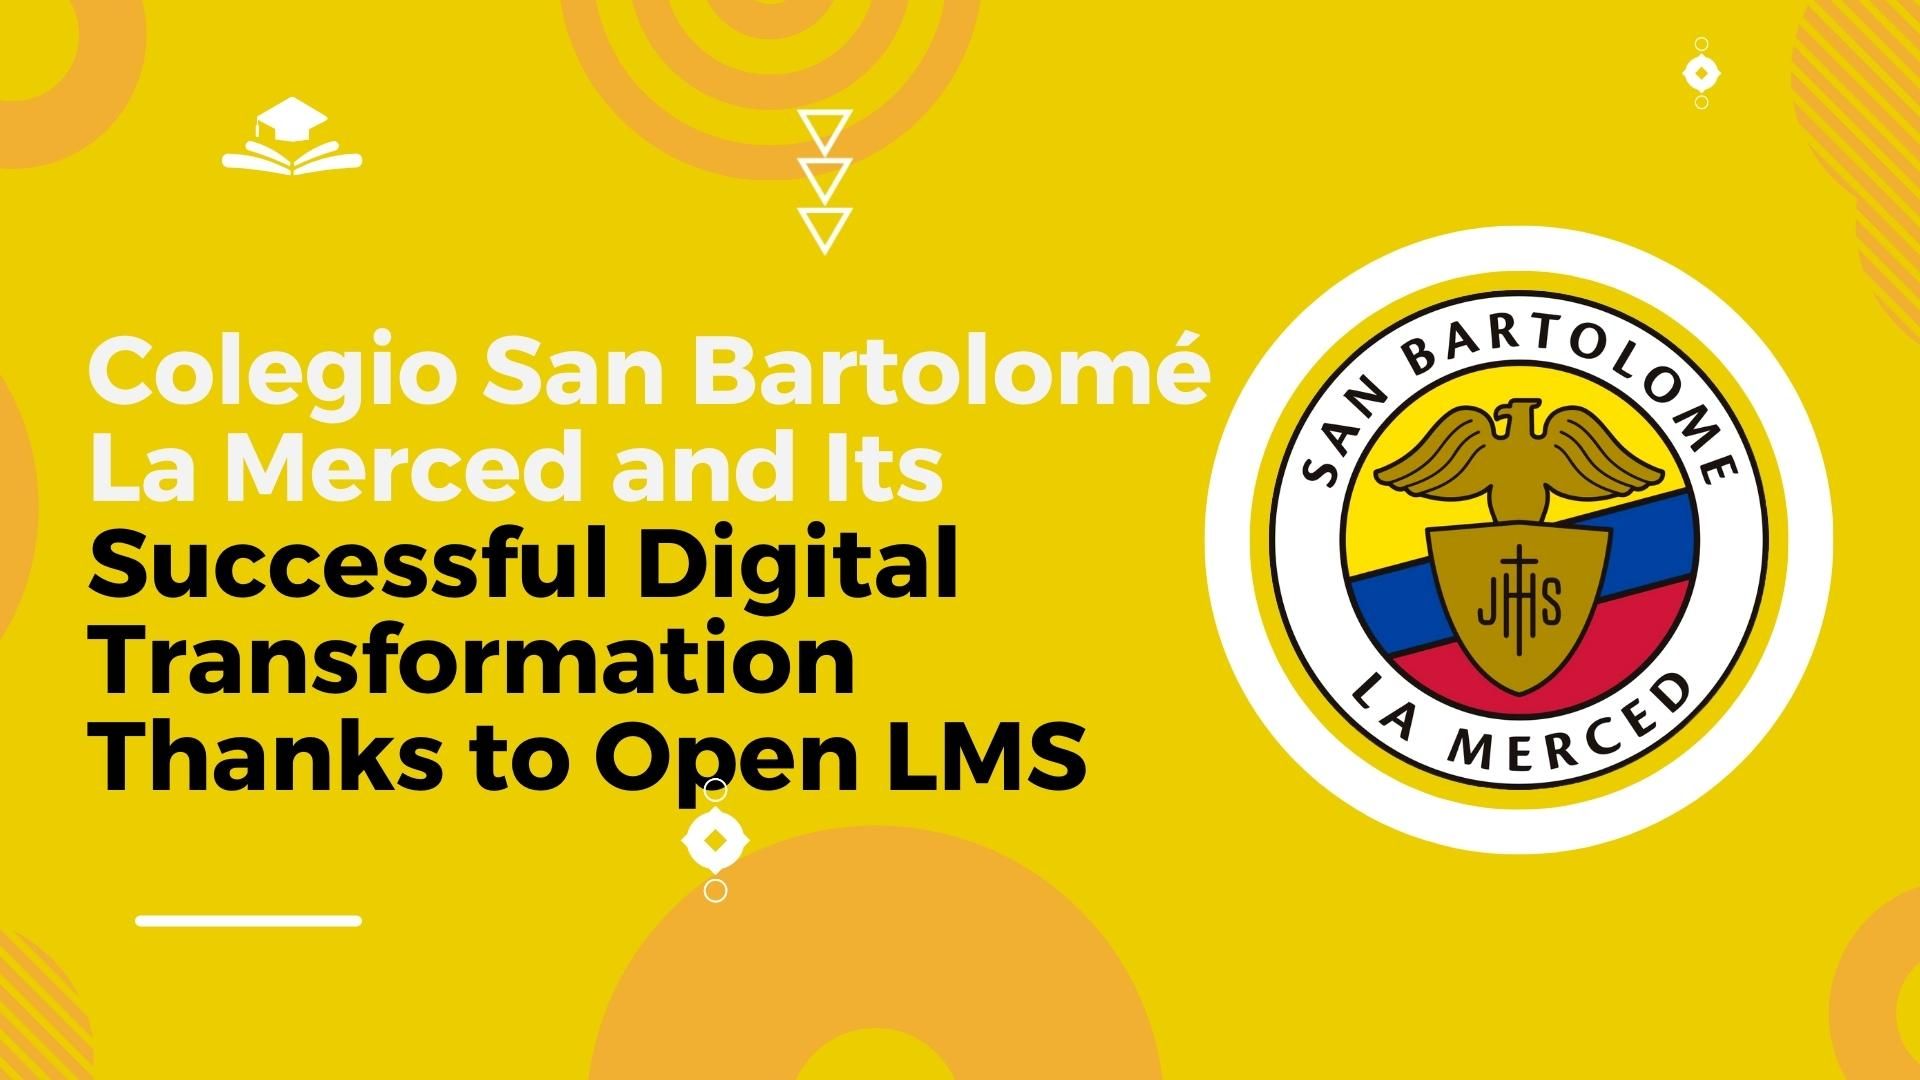 Colegio San Bartolomé La Merced and Its Successful Digital Transformation Thanks to Open LMS